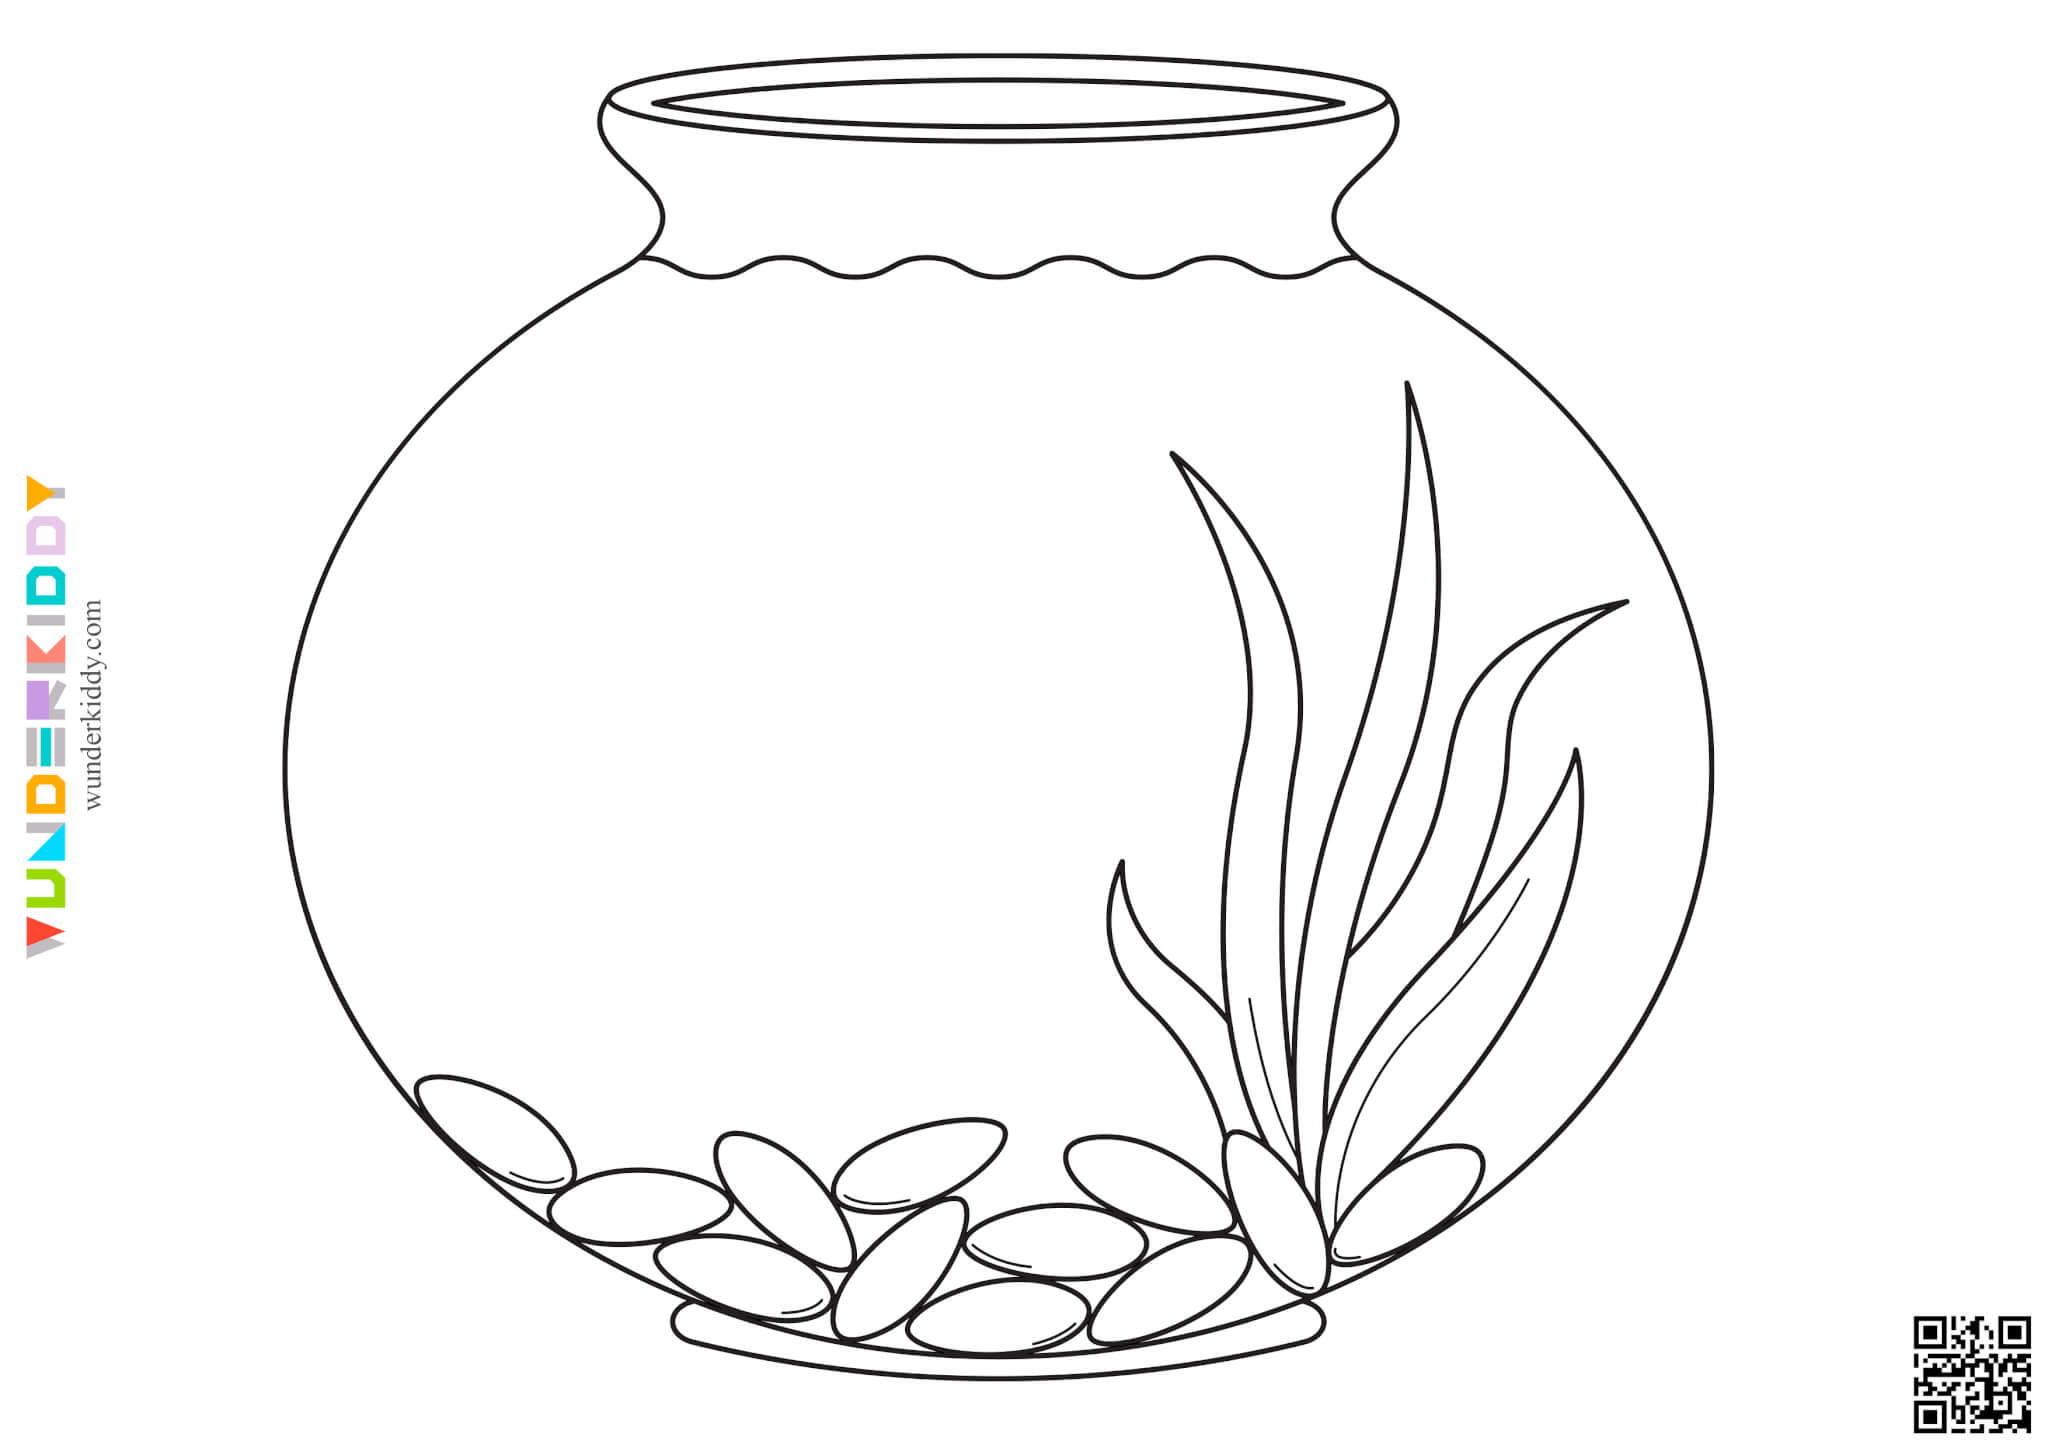 Fish Bowl Template - Image 4